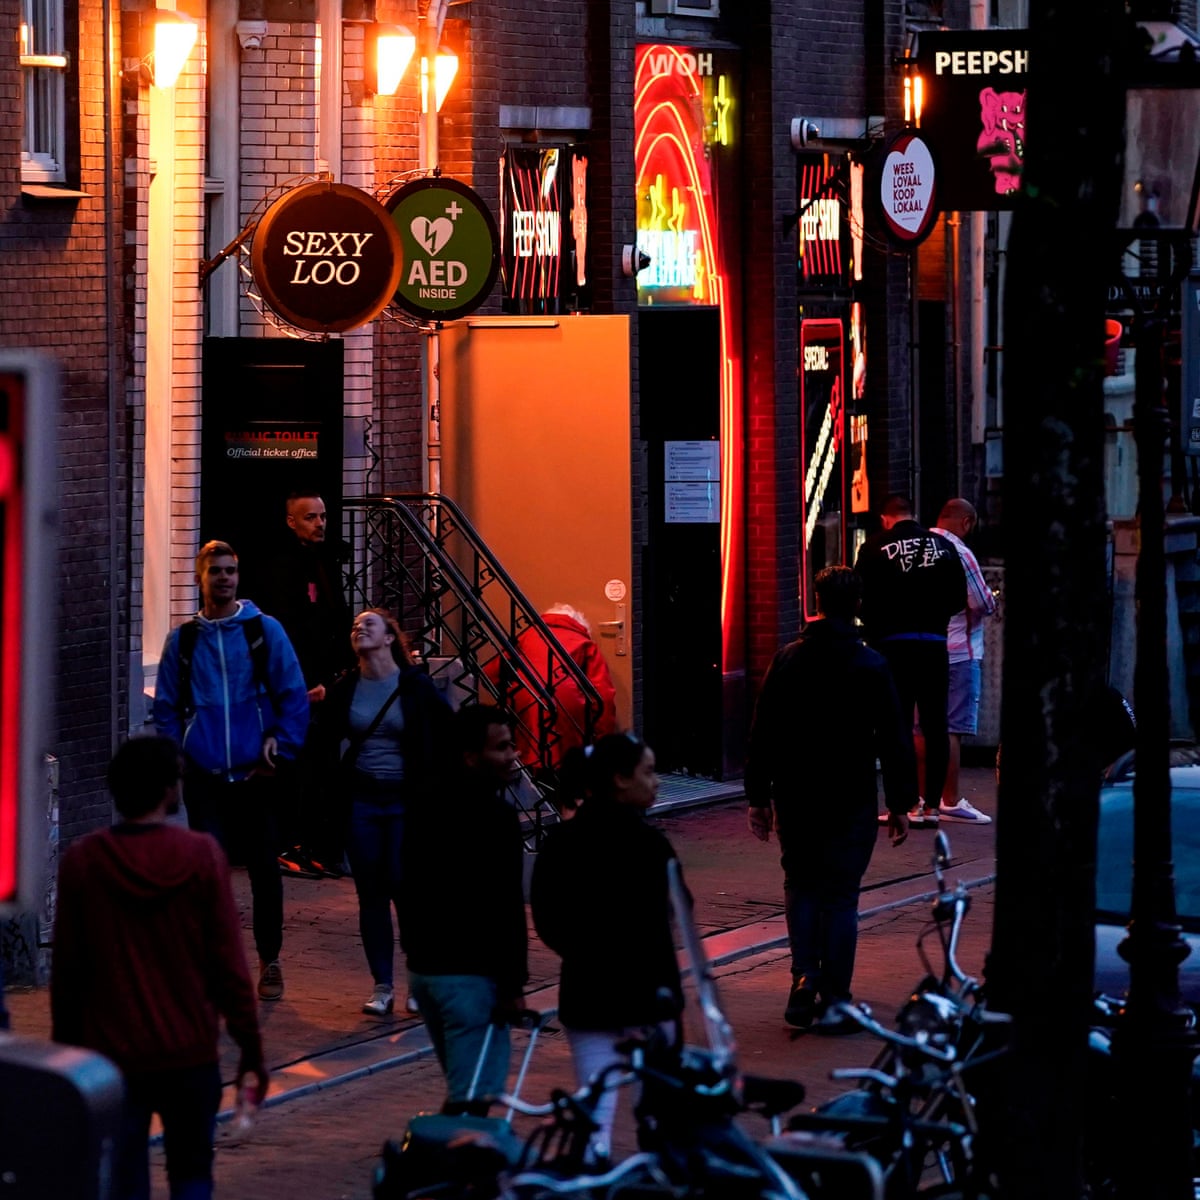 red lantern amsterdam - www.optuseducation.com 